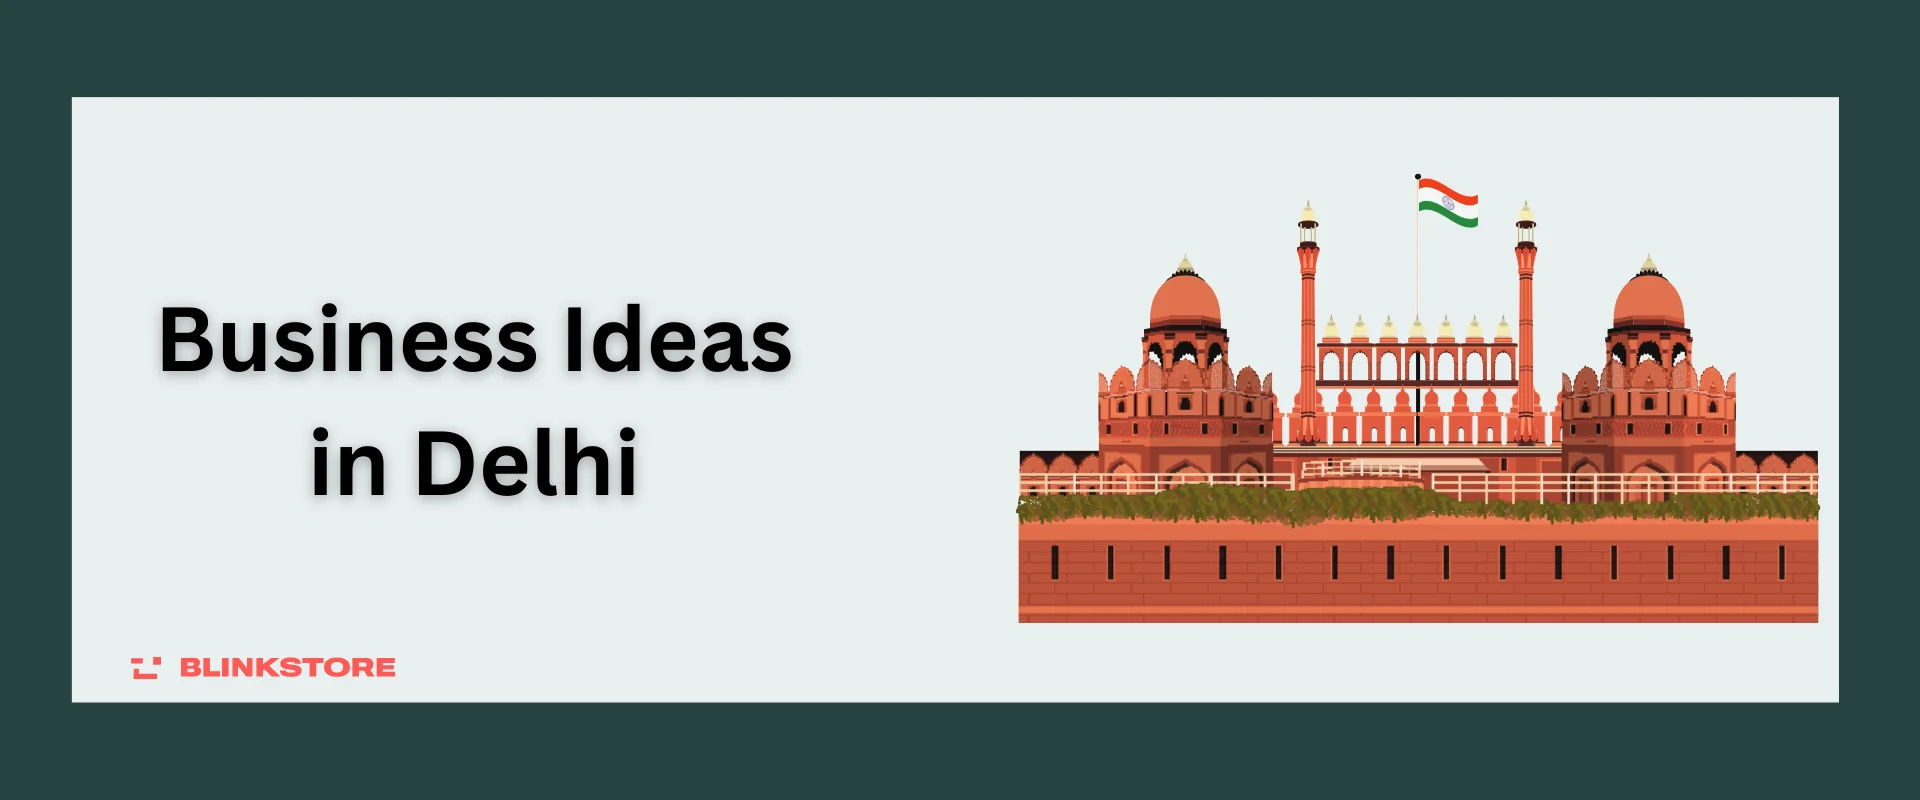 Business Ideas in Delhi